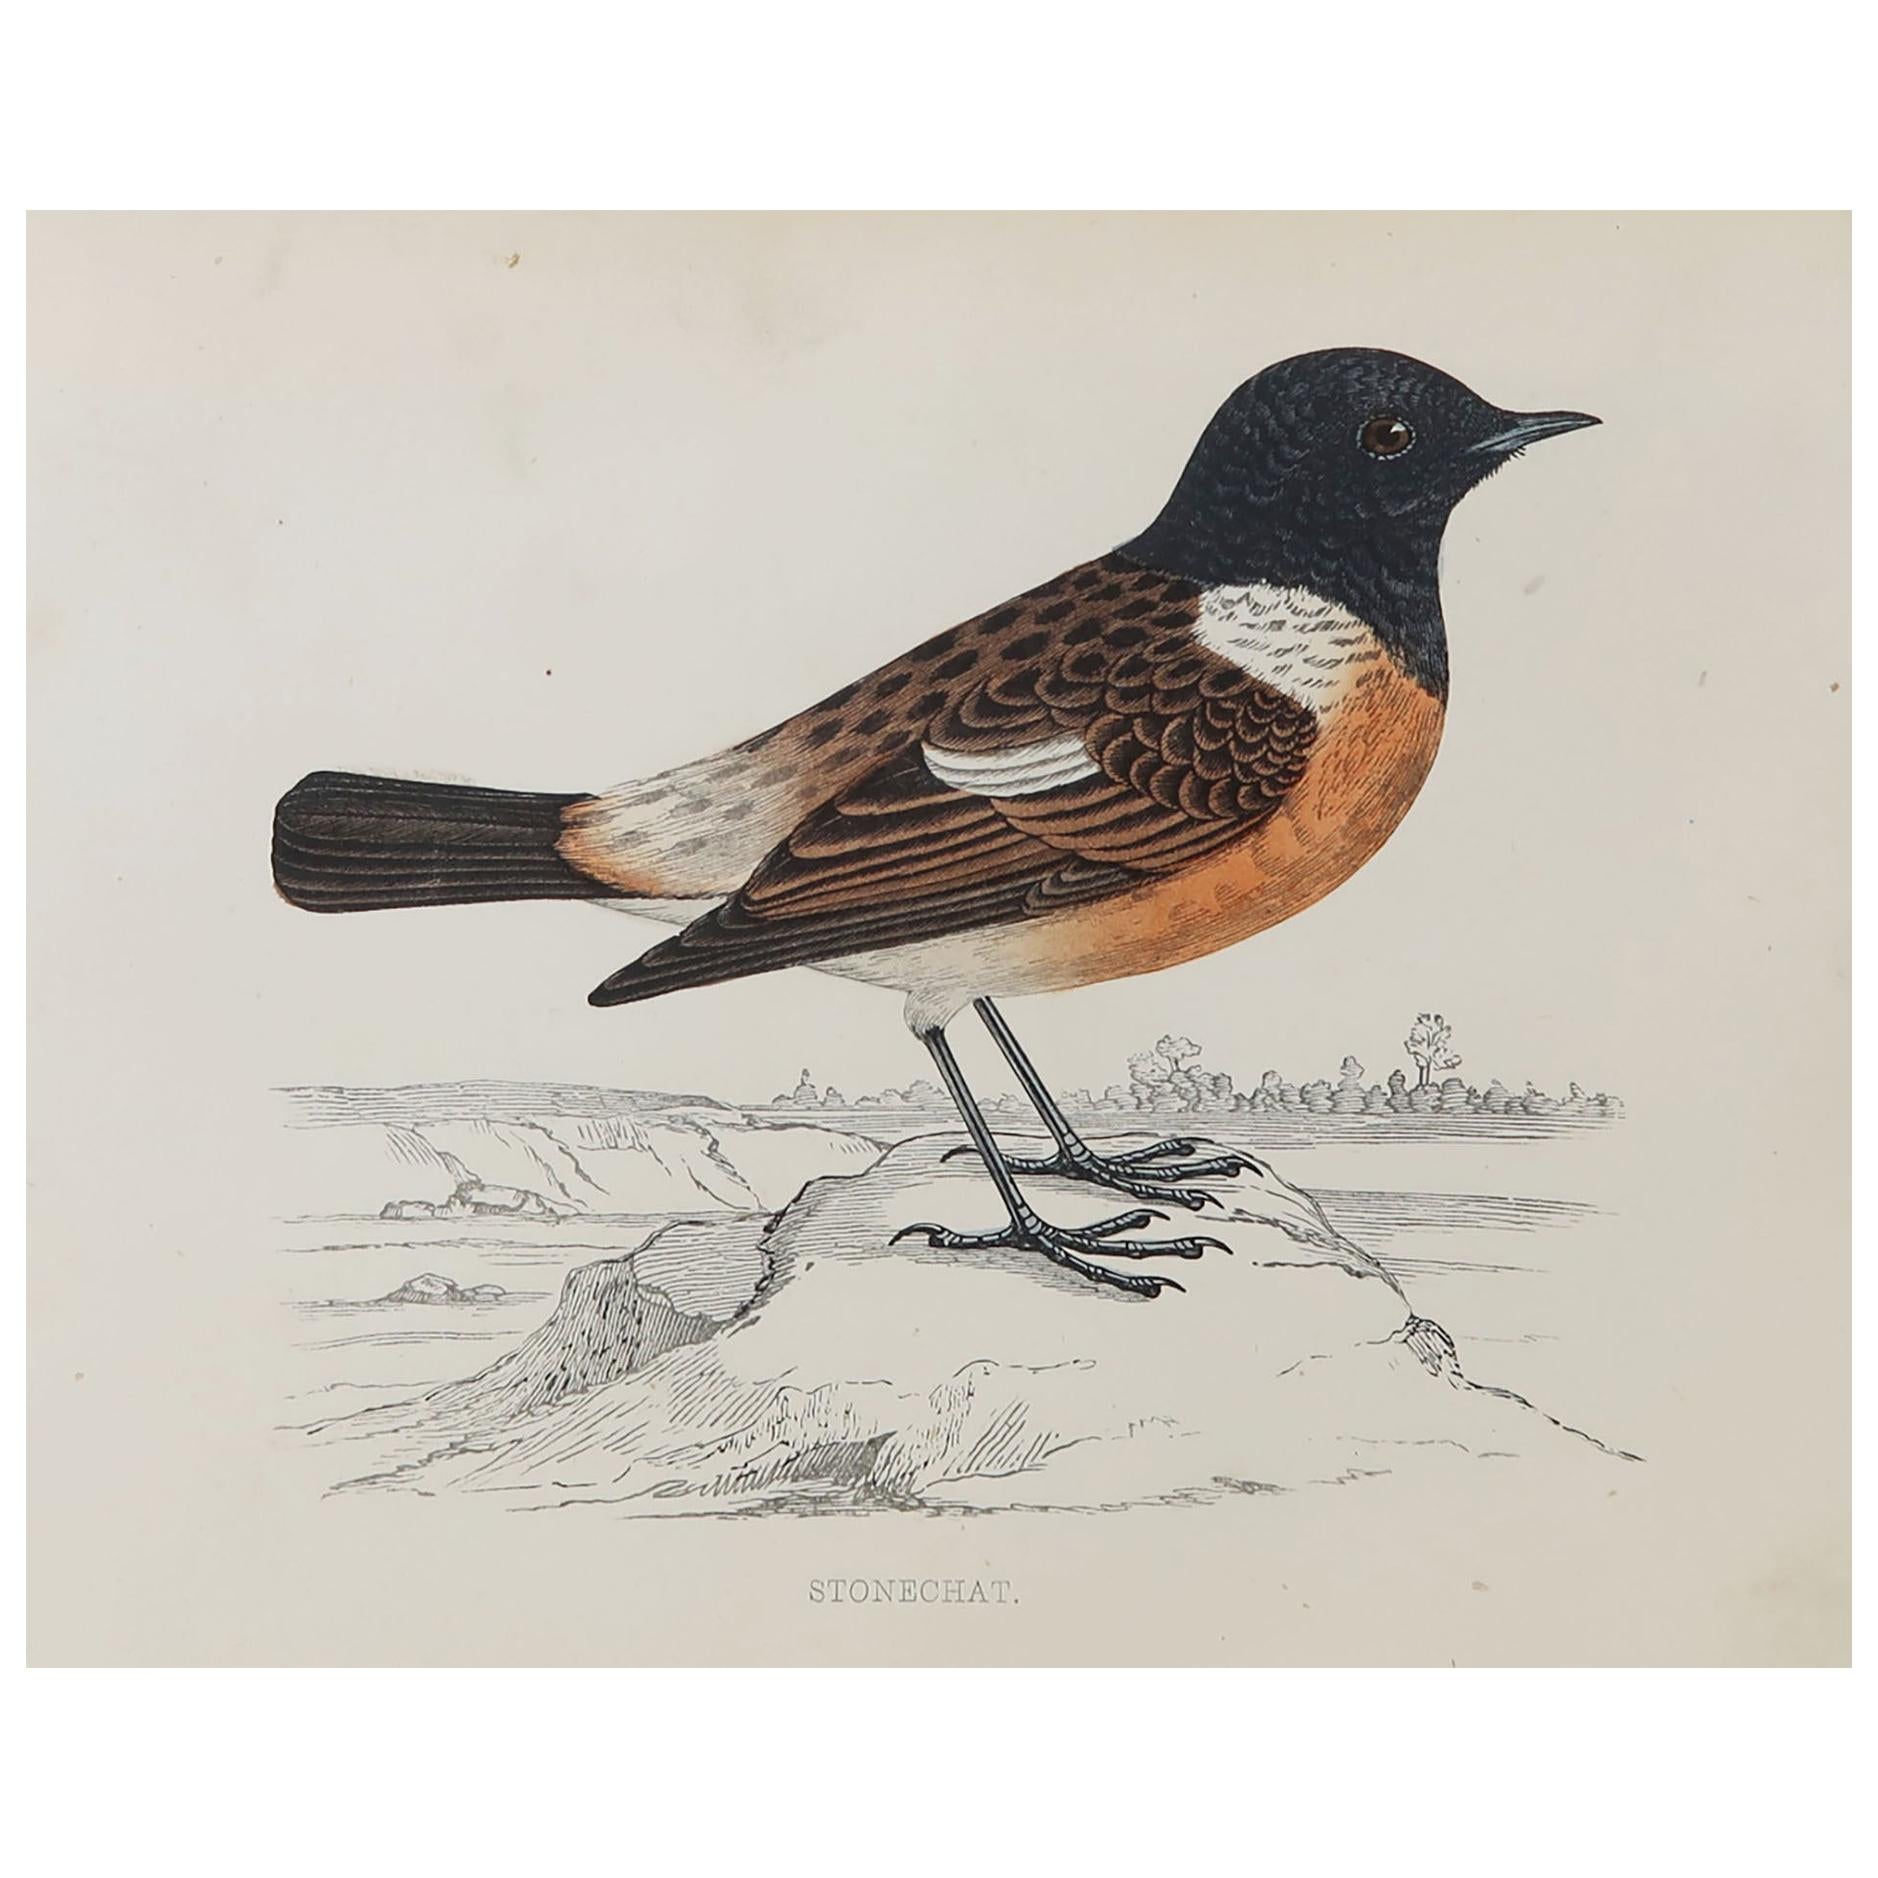 Original Antique Bird Print, the Stonechat, circa 1870